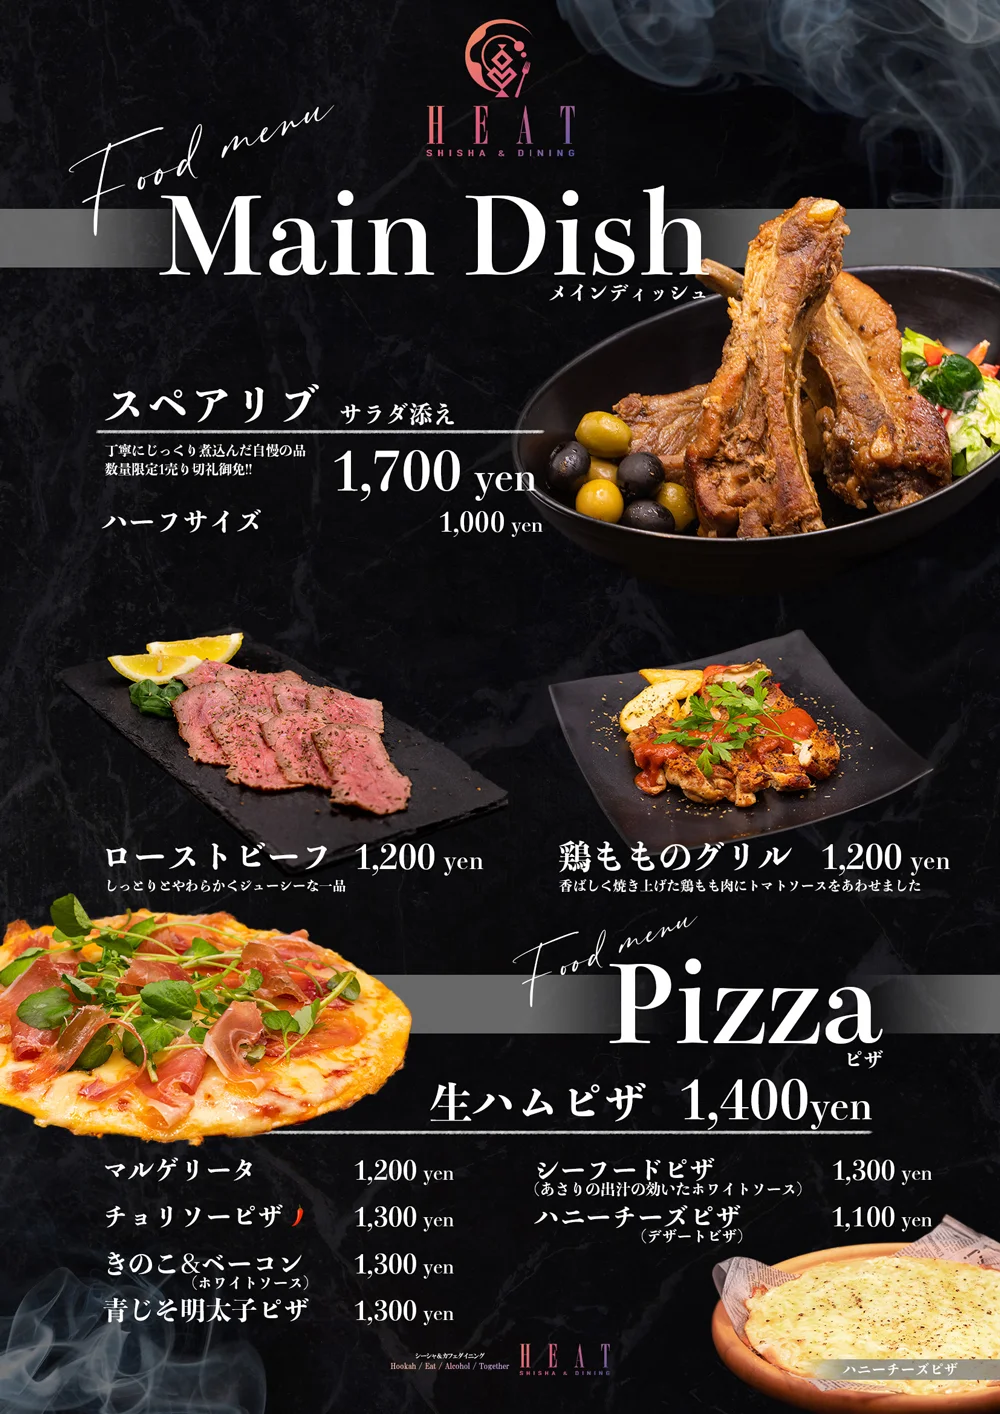 Main Dish, Pizza